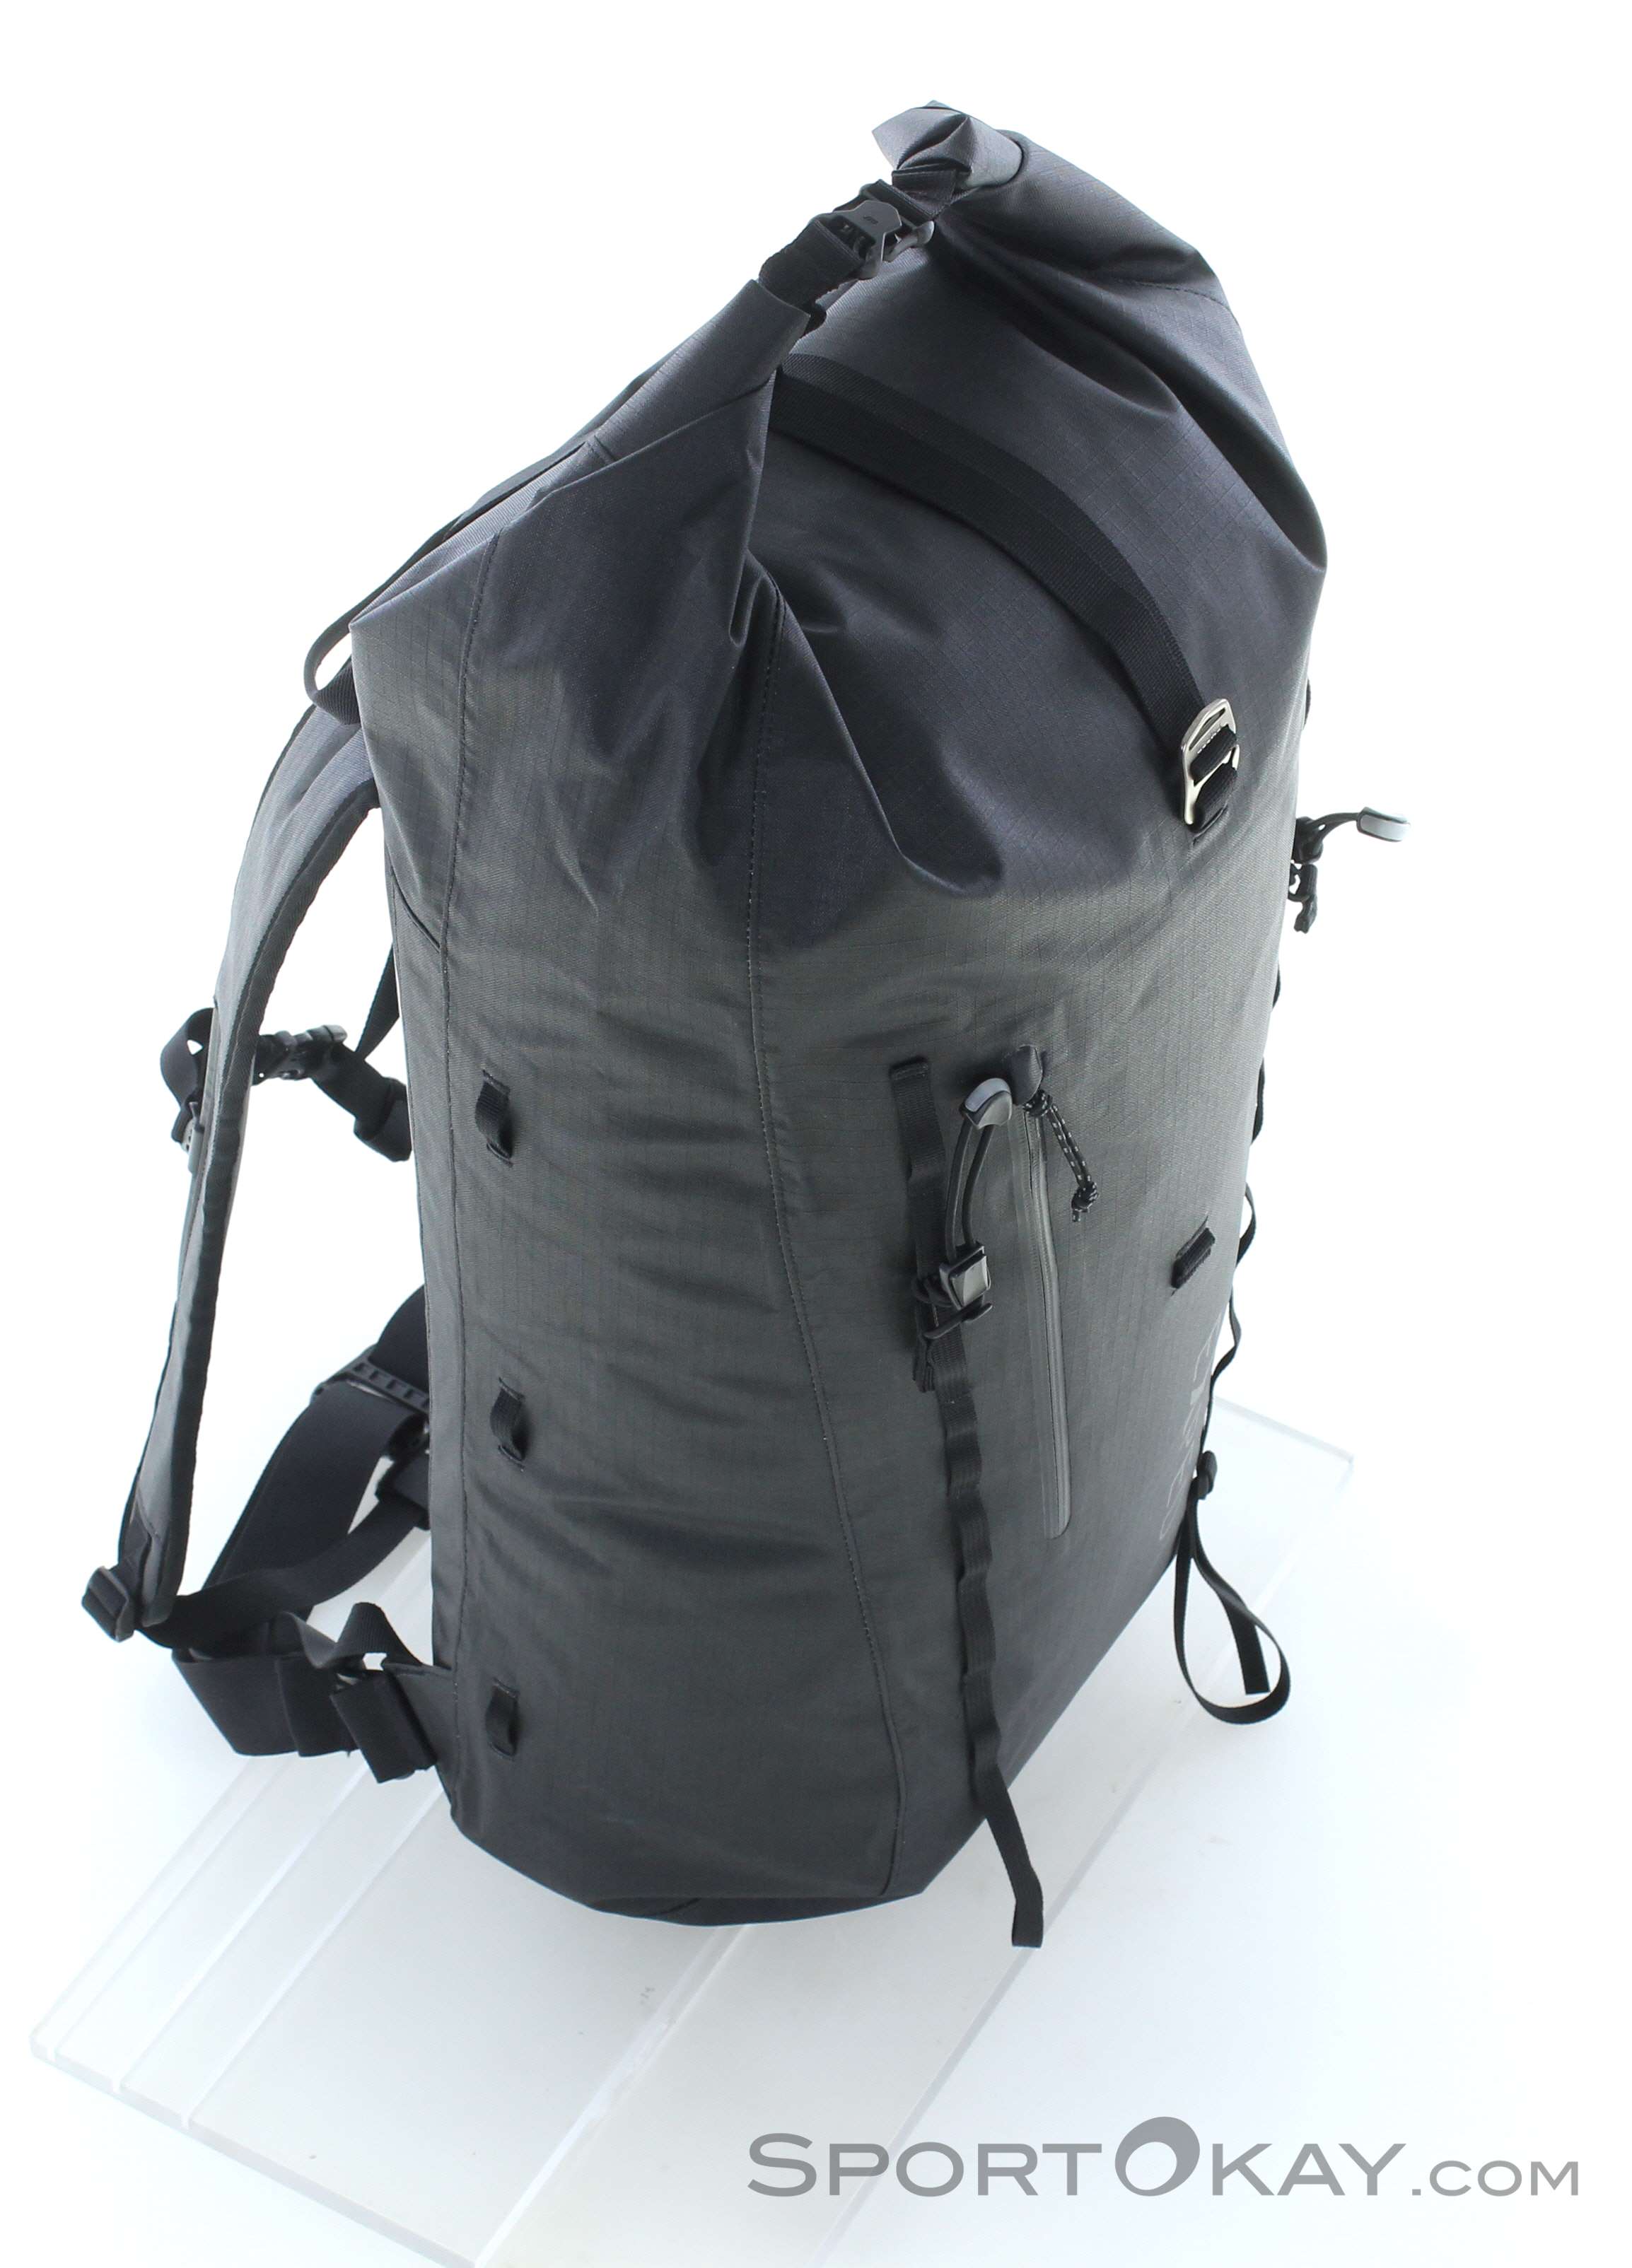 Exped Black Ice 45 Backpack (Black)